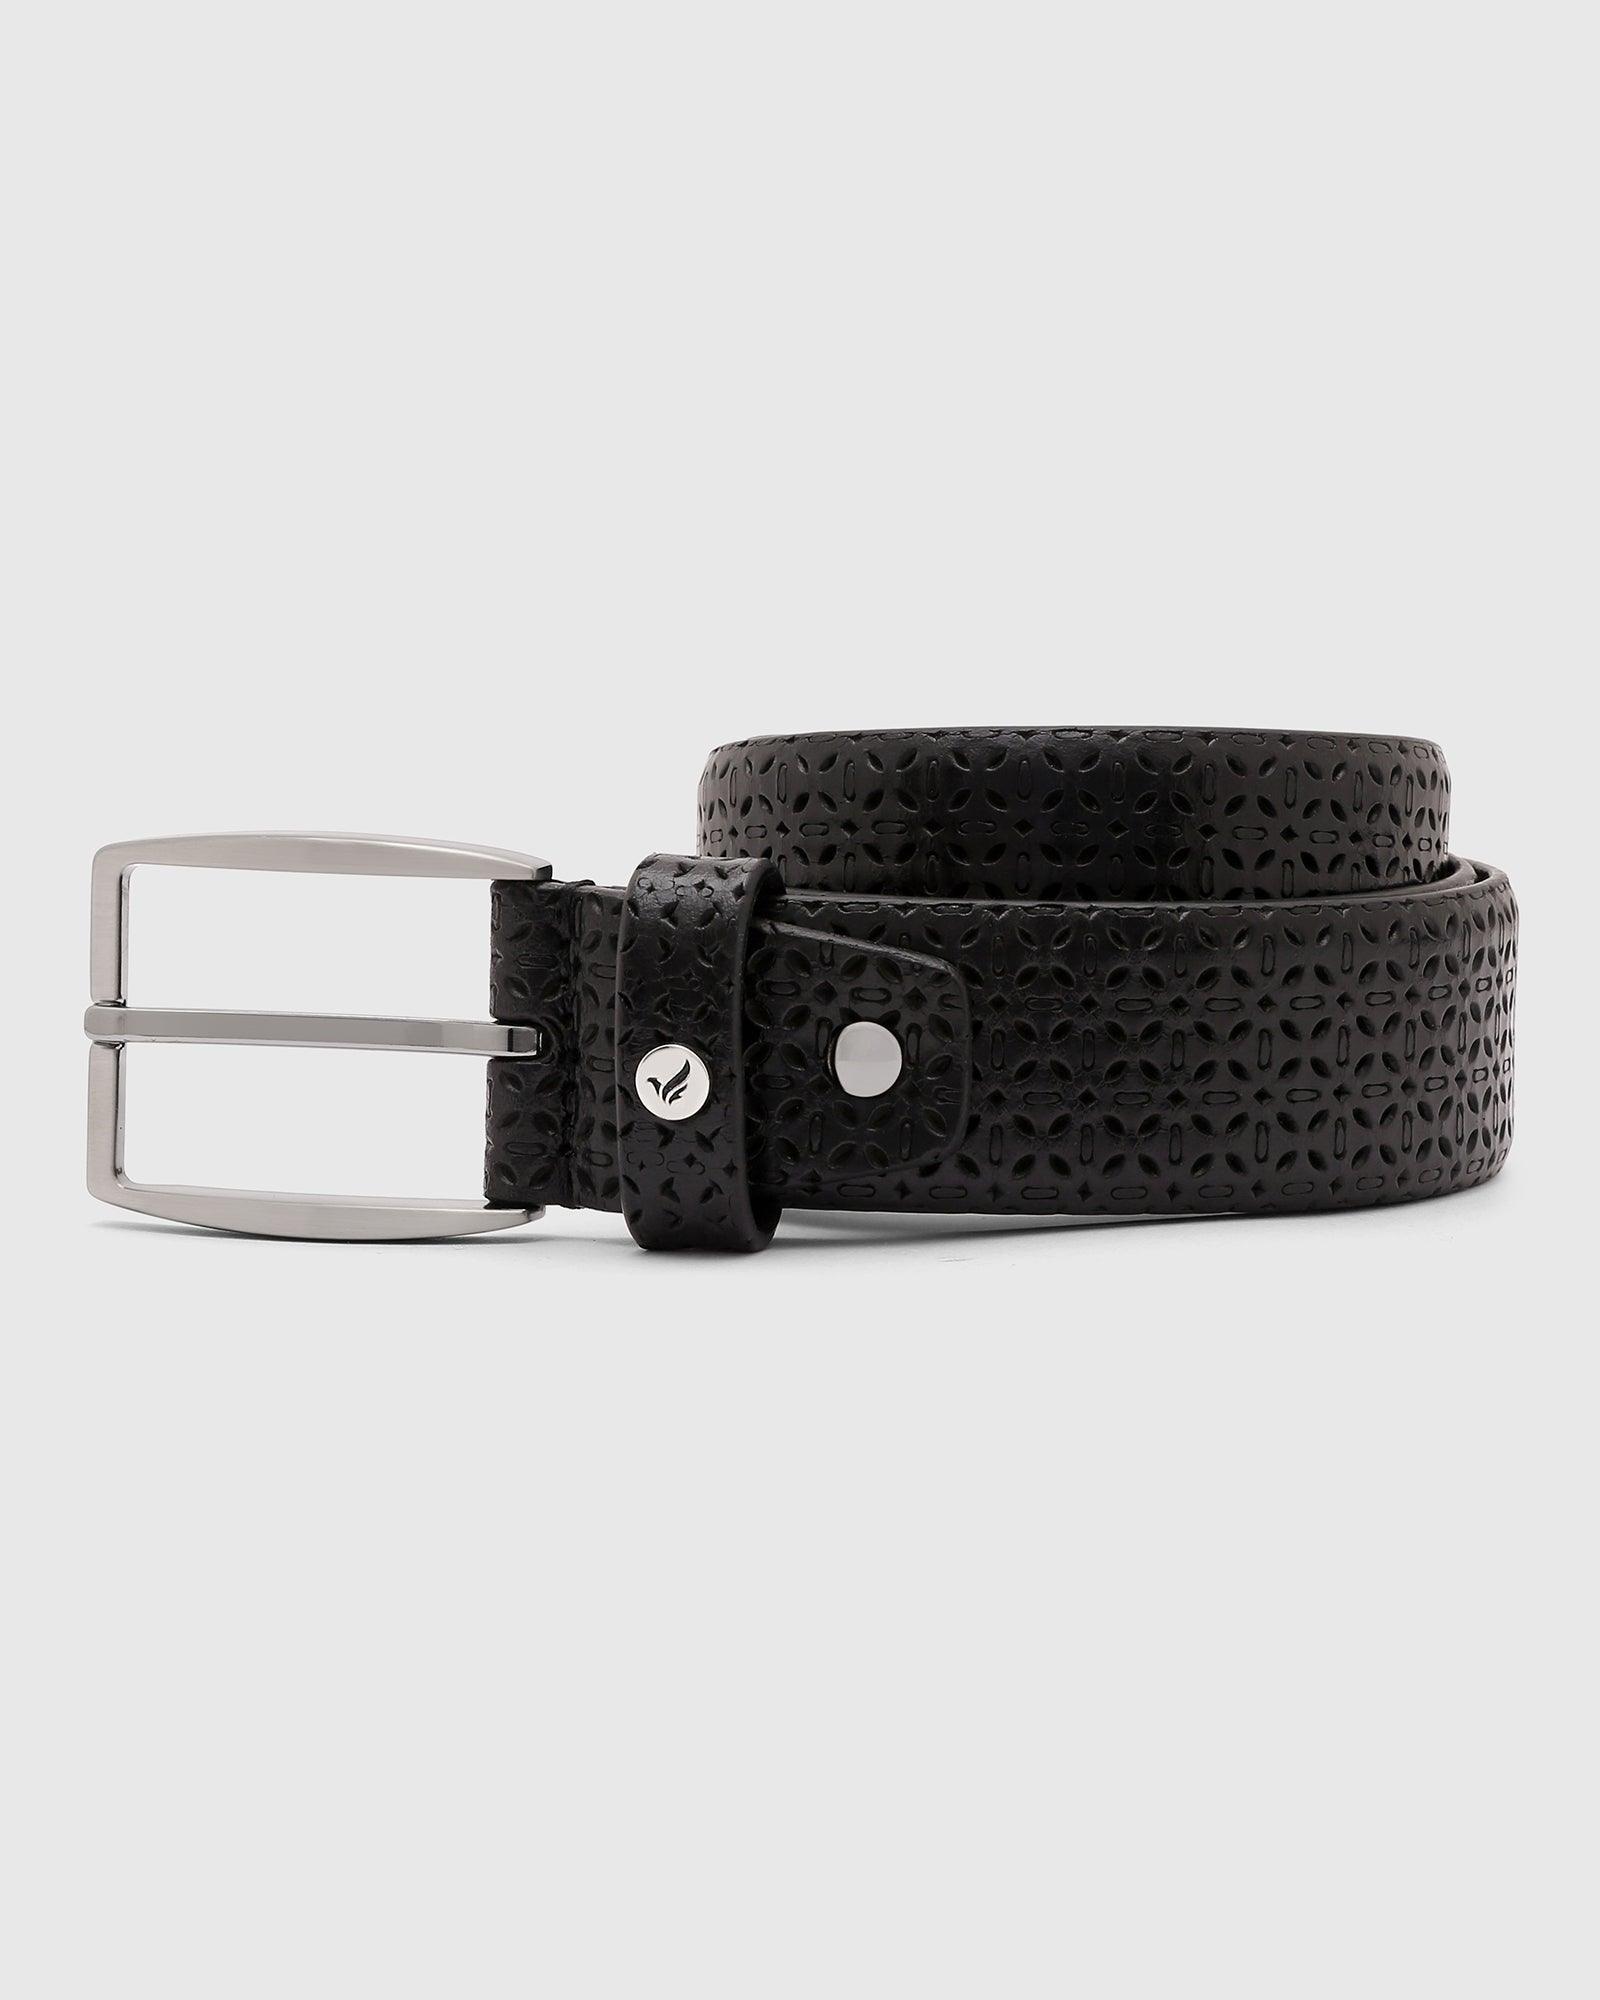 textured leather belt in black (qampel)